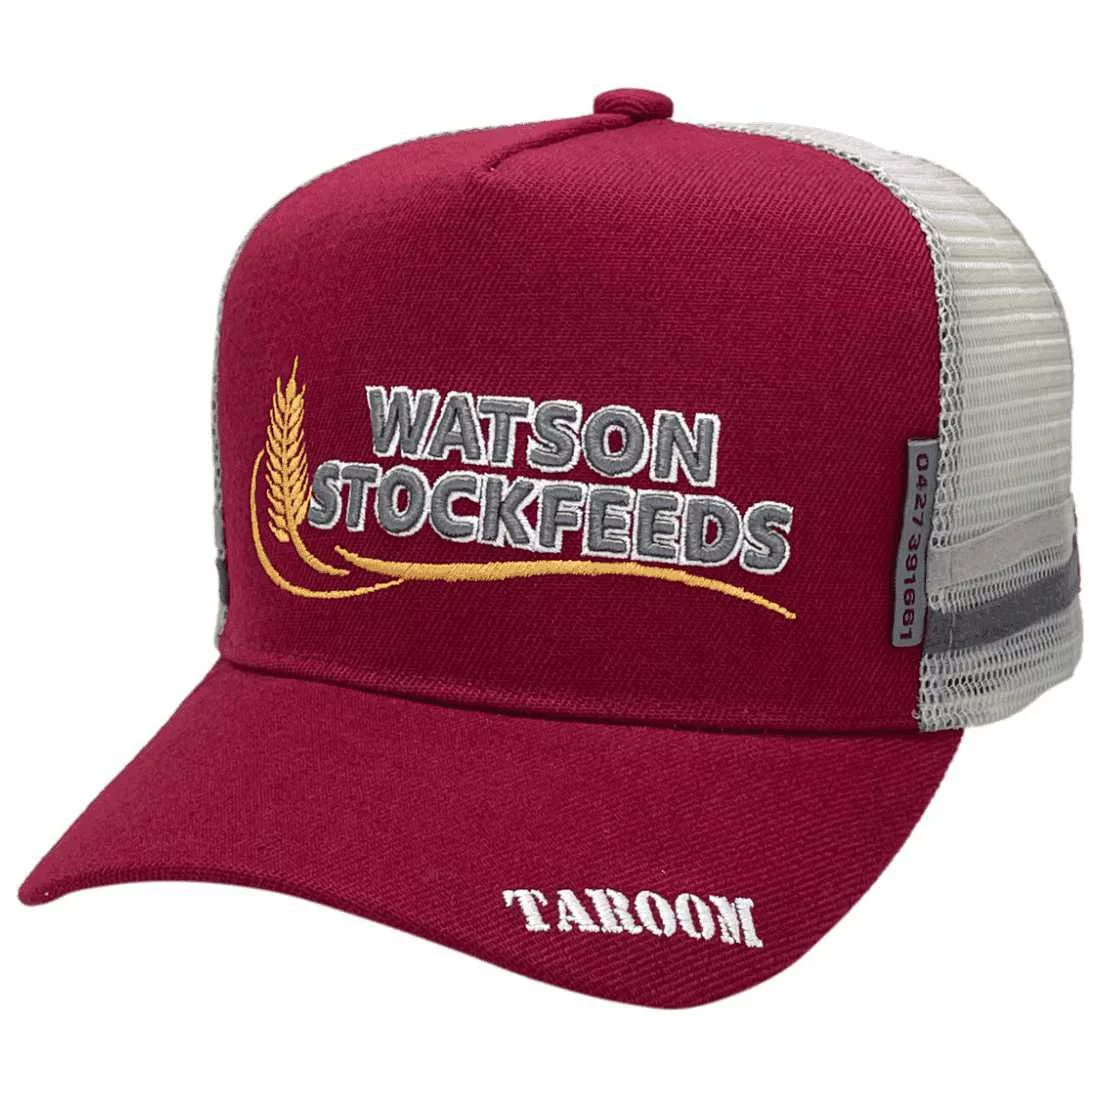 Watson Stockfeeds Taroom Qld HP Original Midrange Aussie Trucker hat with double side bands Acrylic Maroon Grey